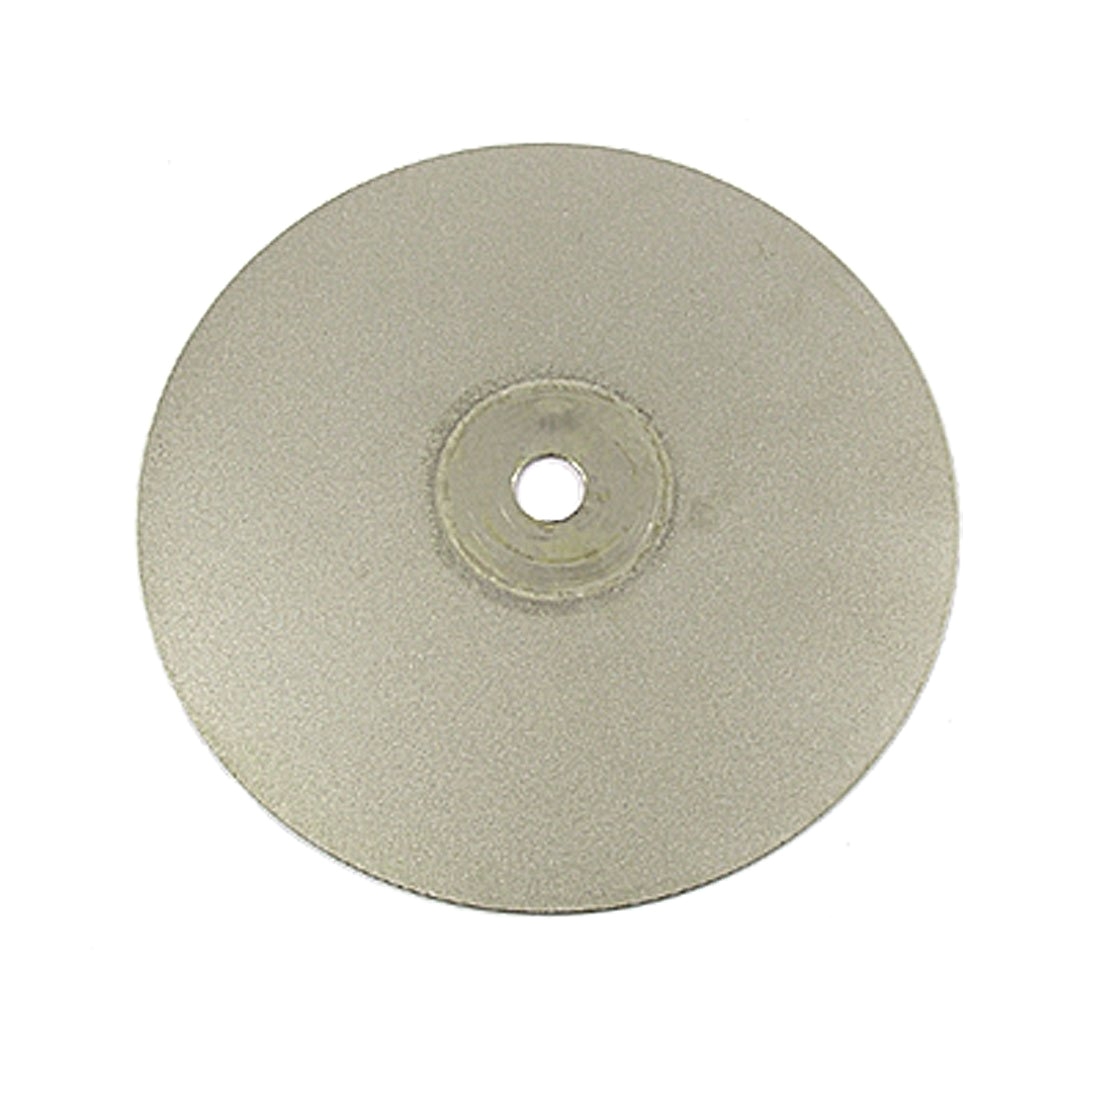 uxcell 6 stone granite diamond grinding wheel disc 400 grit 1 2 arbor hole